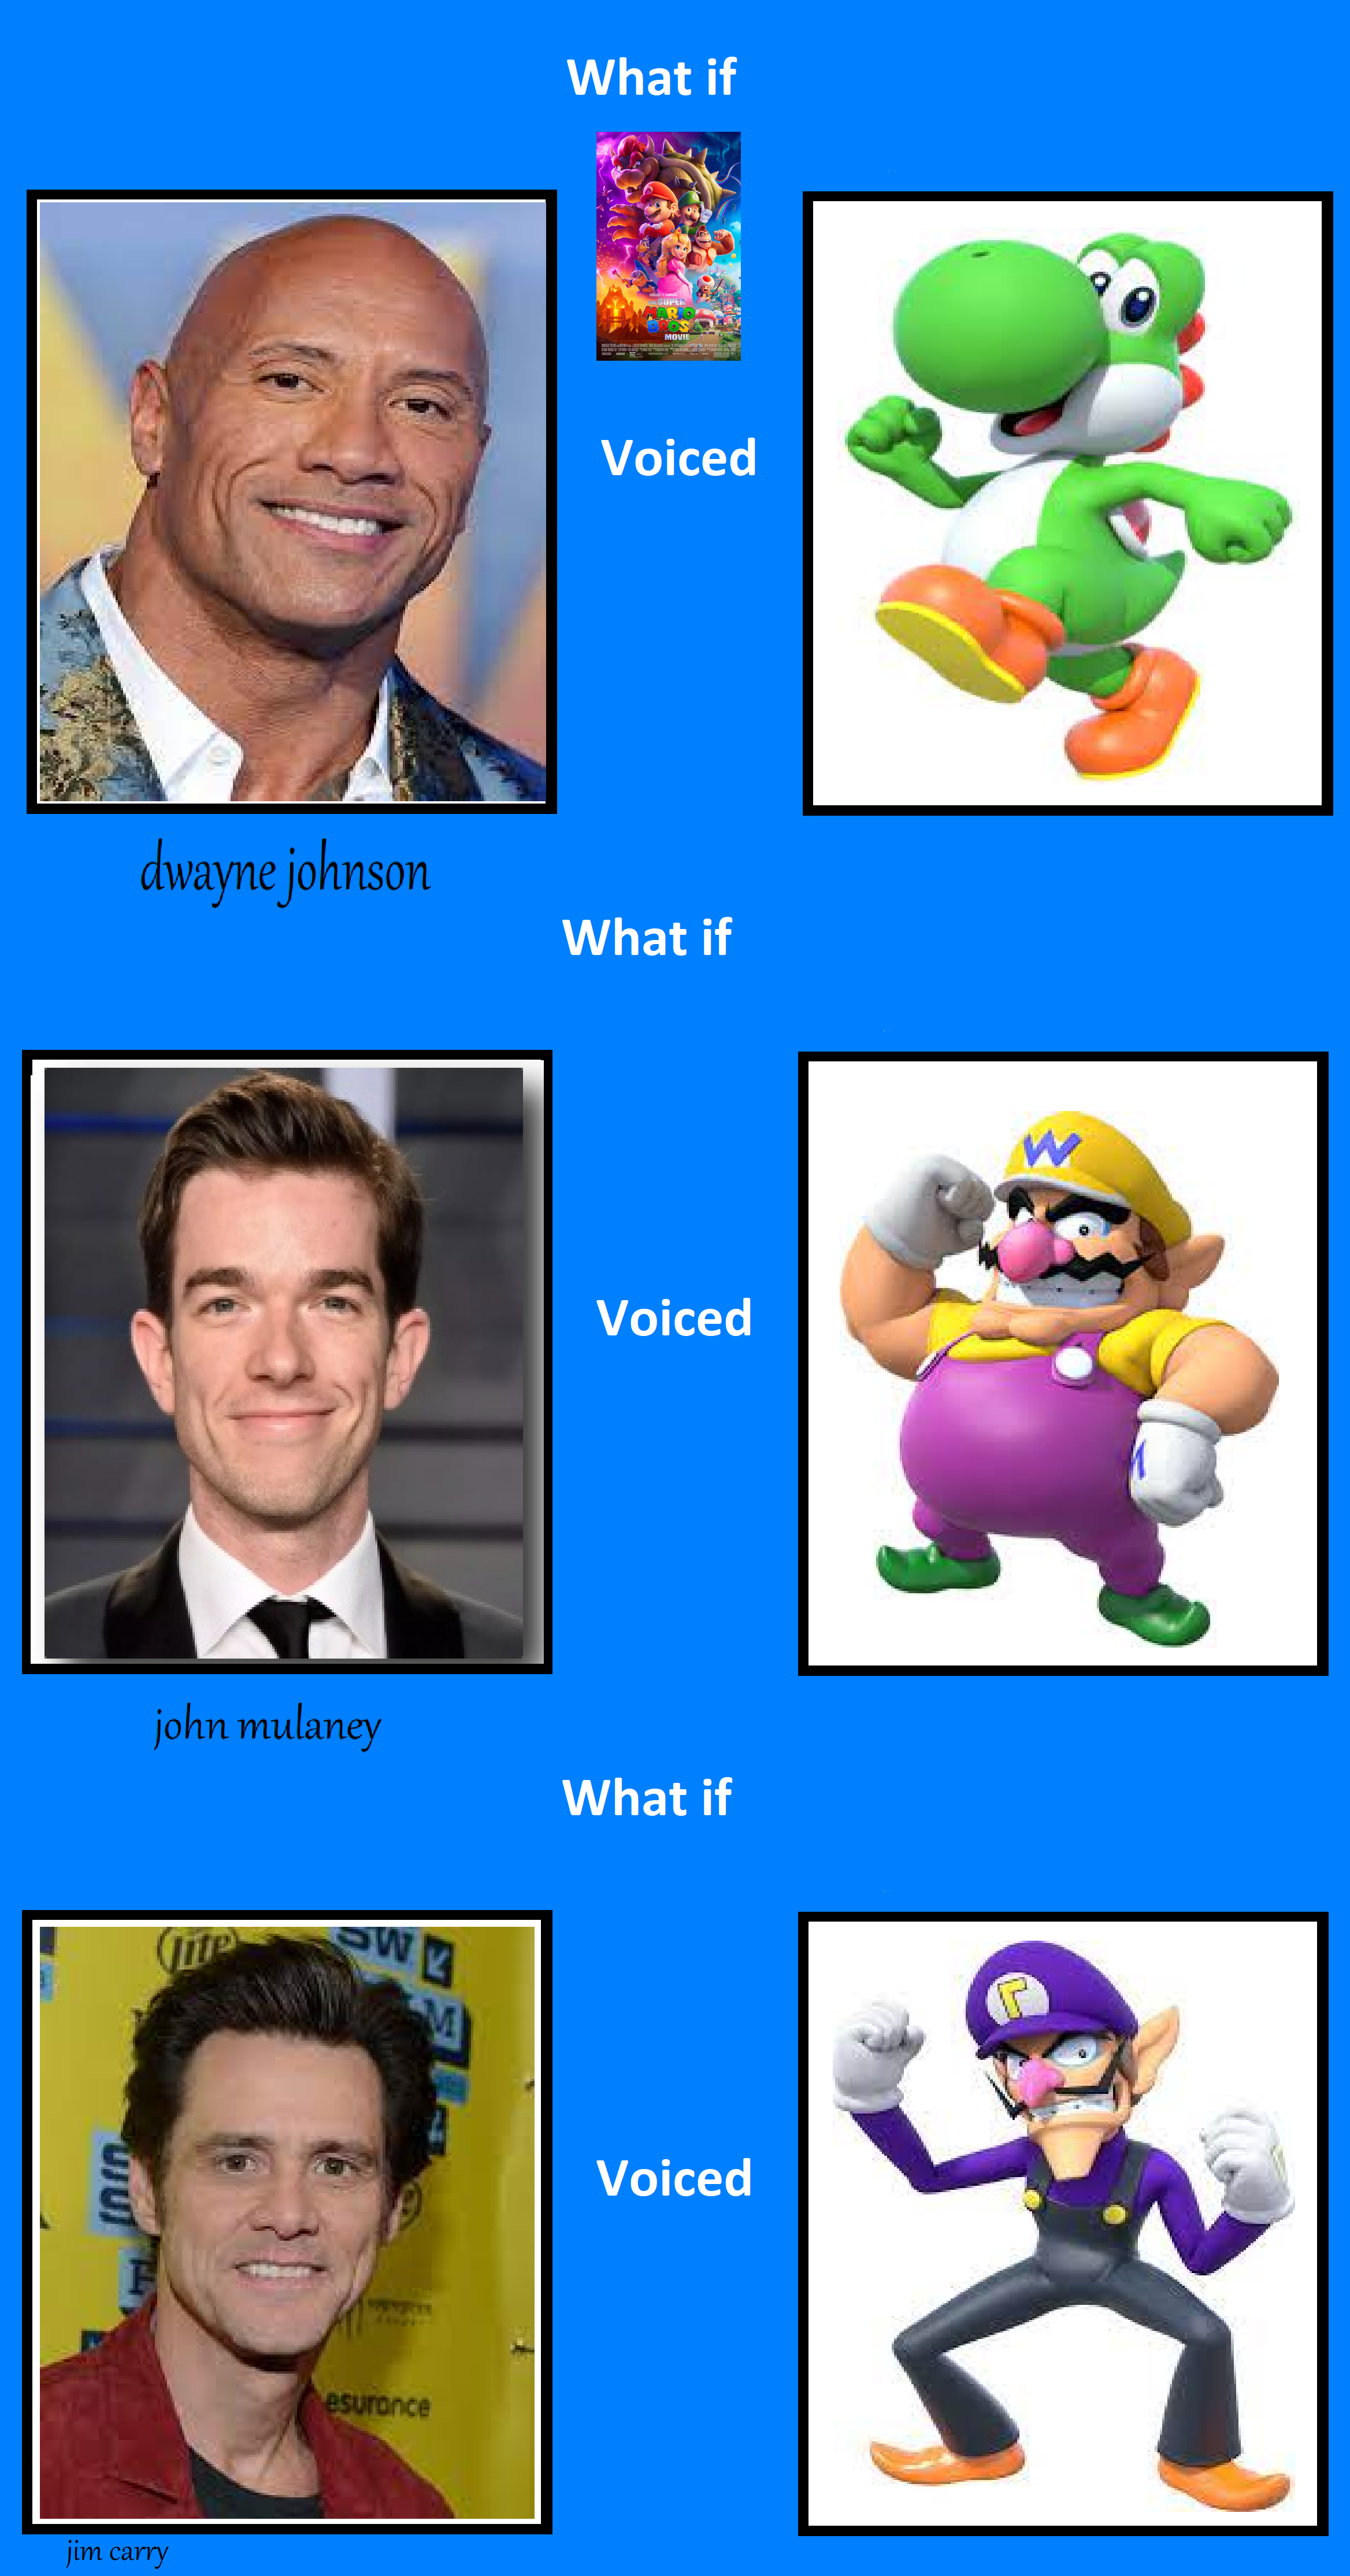 The Super Mario Bros Movie 2 Fan Casting on myCast